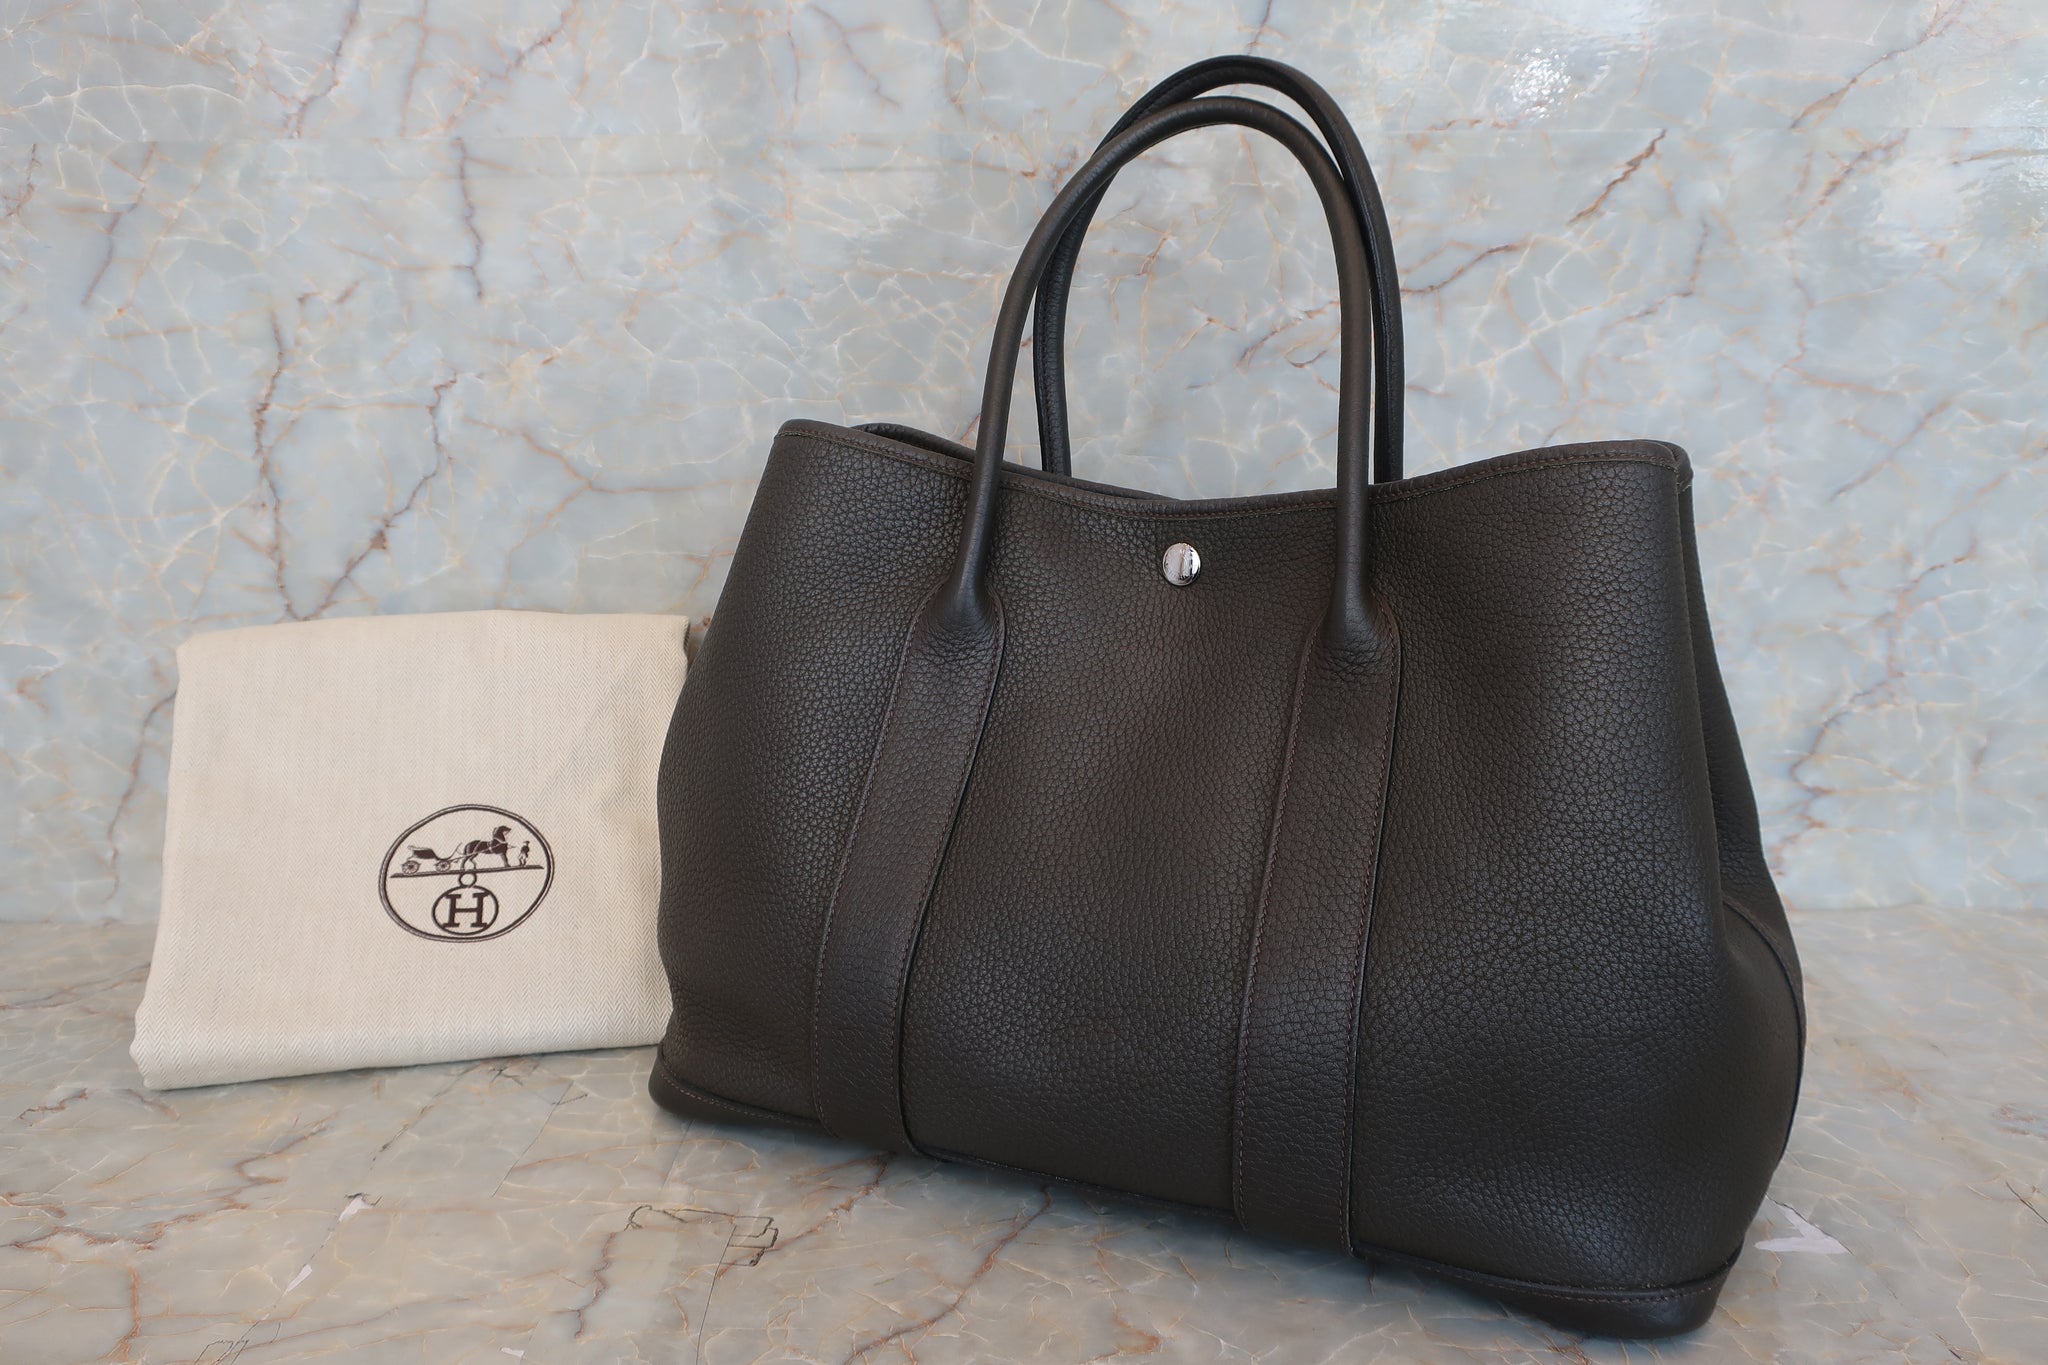 Hermes Garden PM Handbag Tote Bag